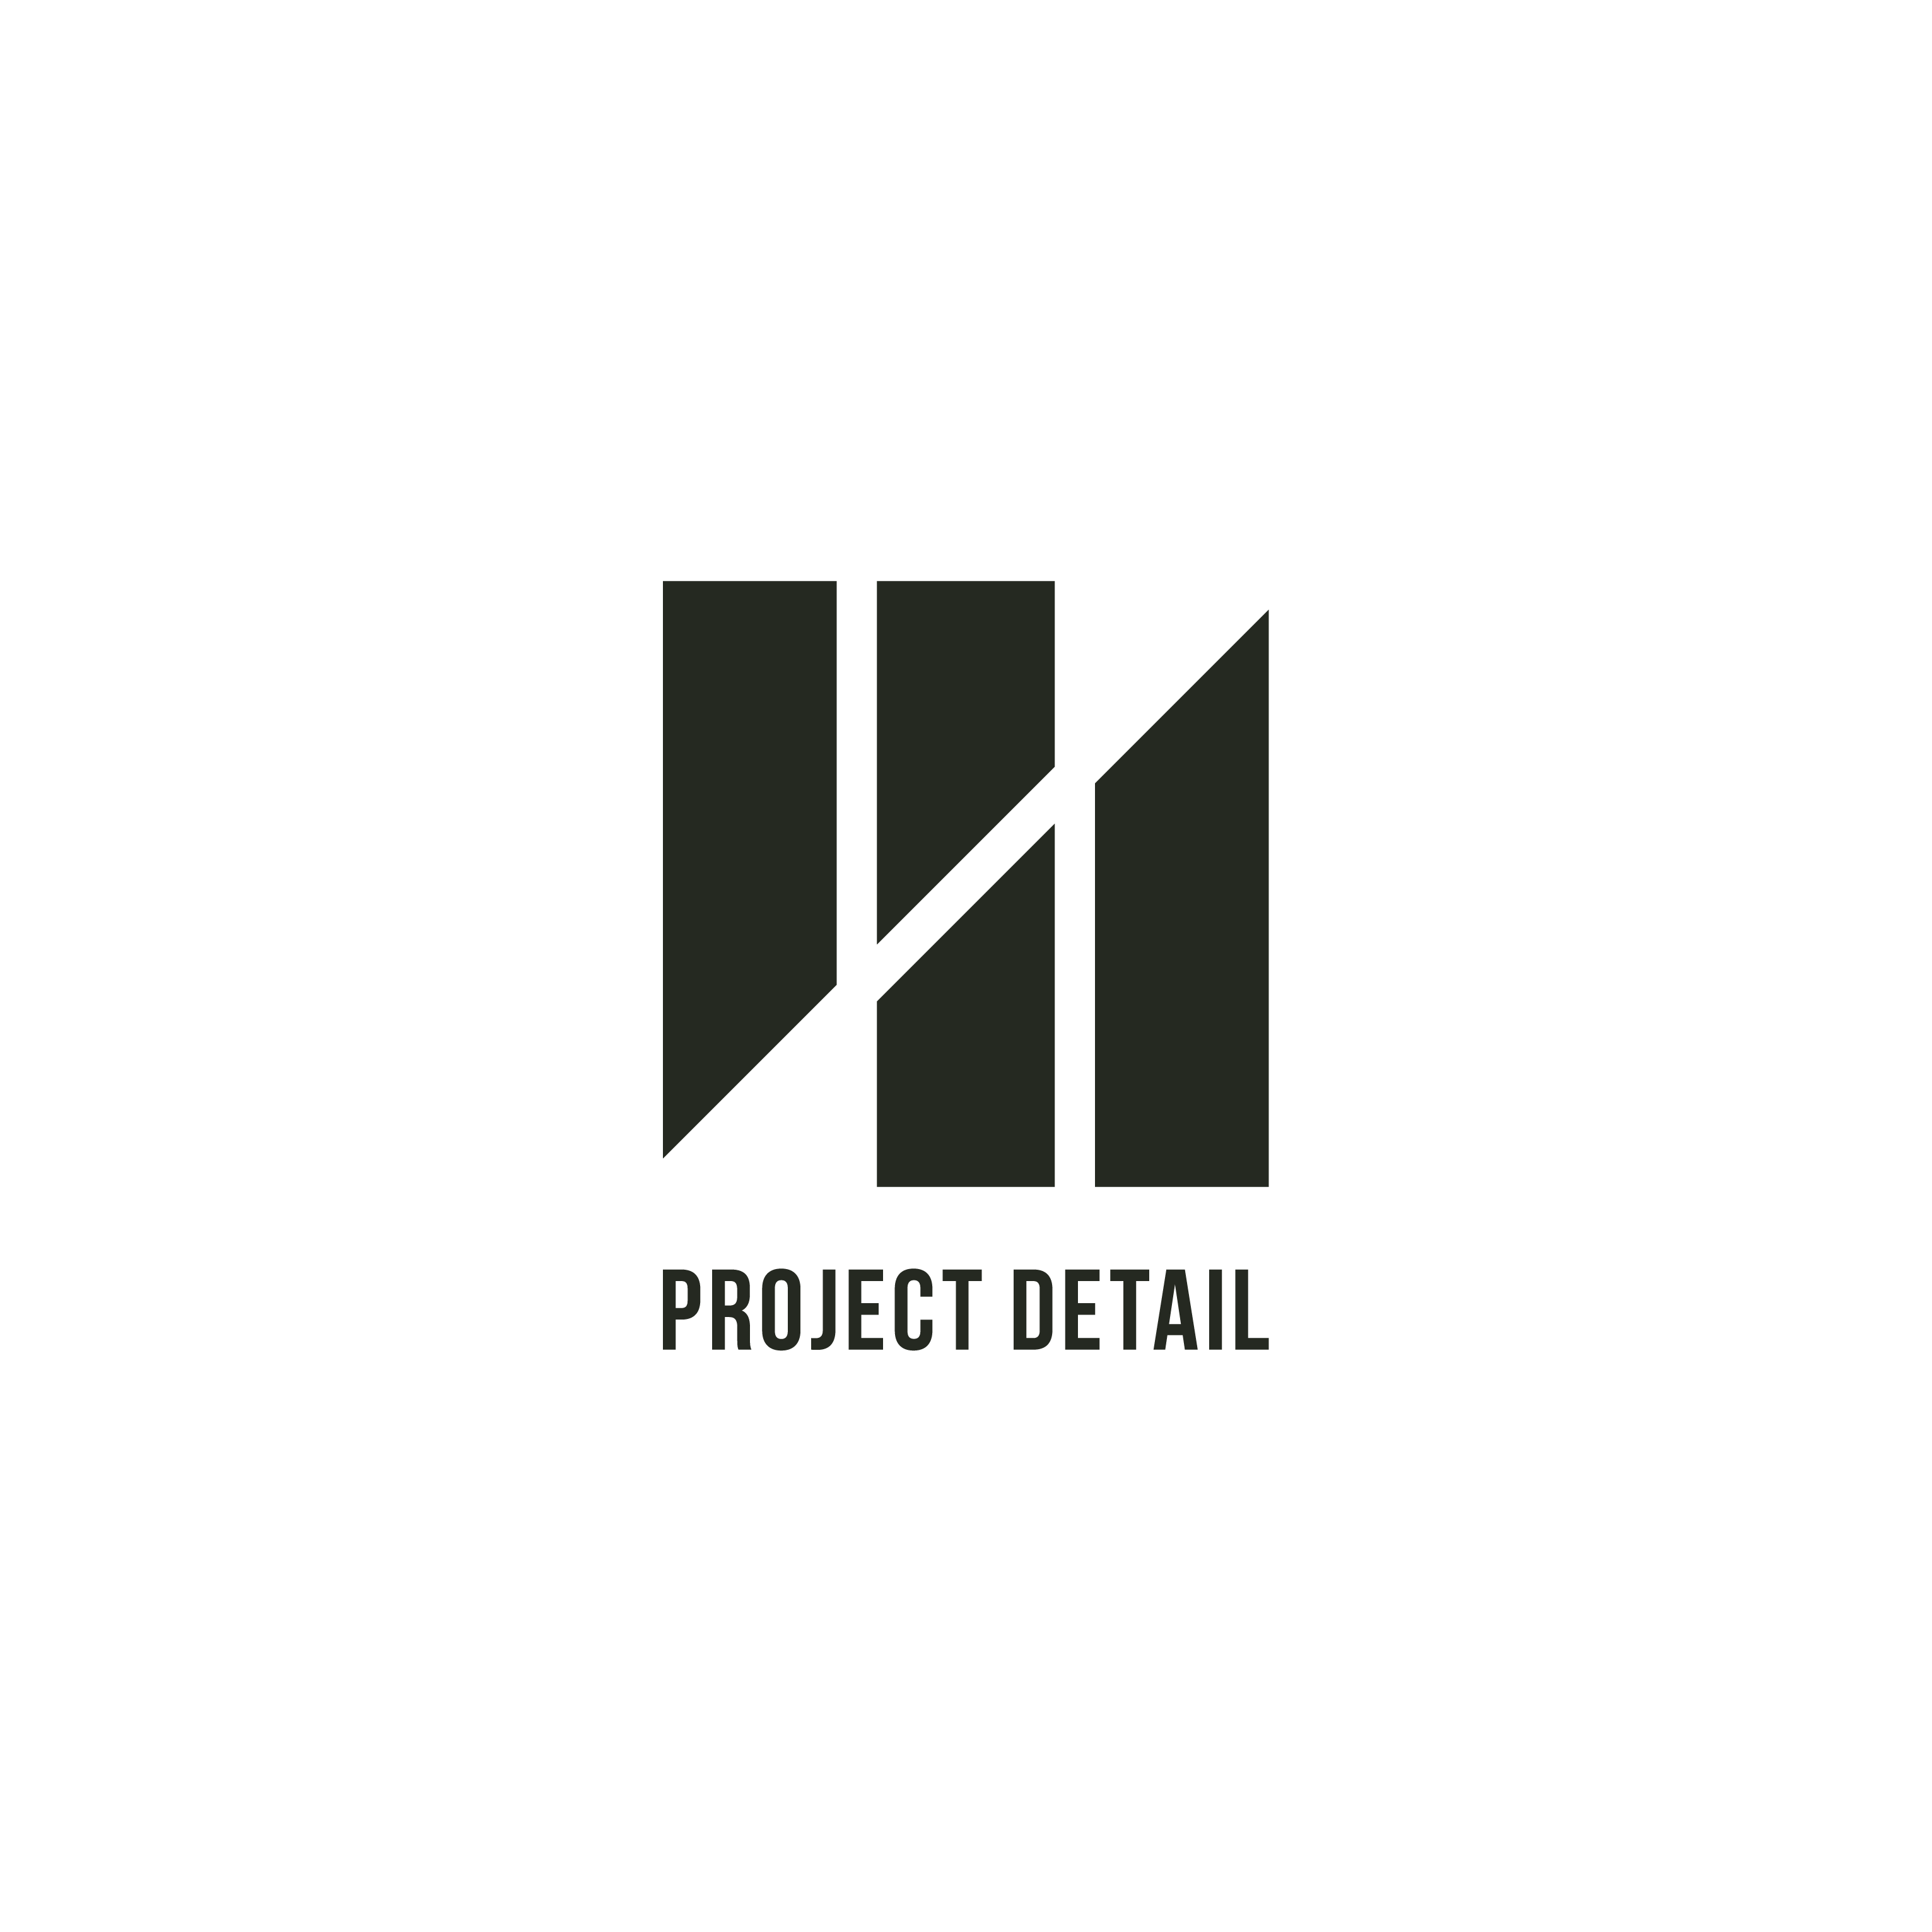 Detail Company Logo - Logo design for Project Detail, an Australian auto detailing company ...